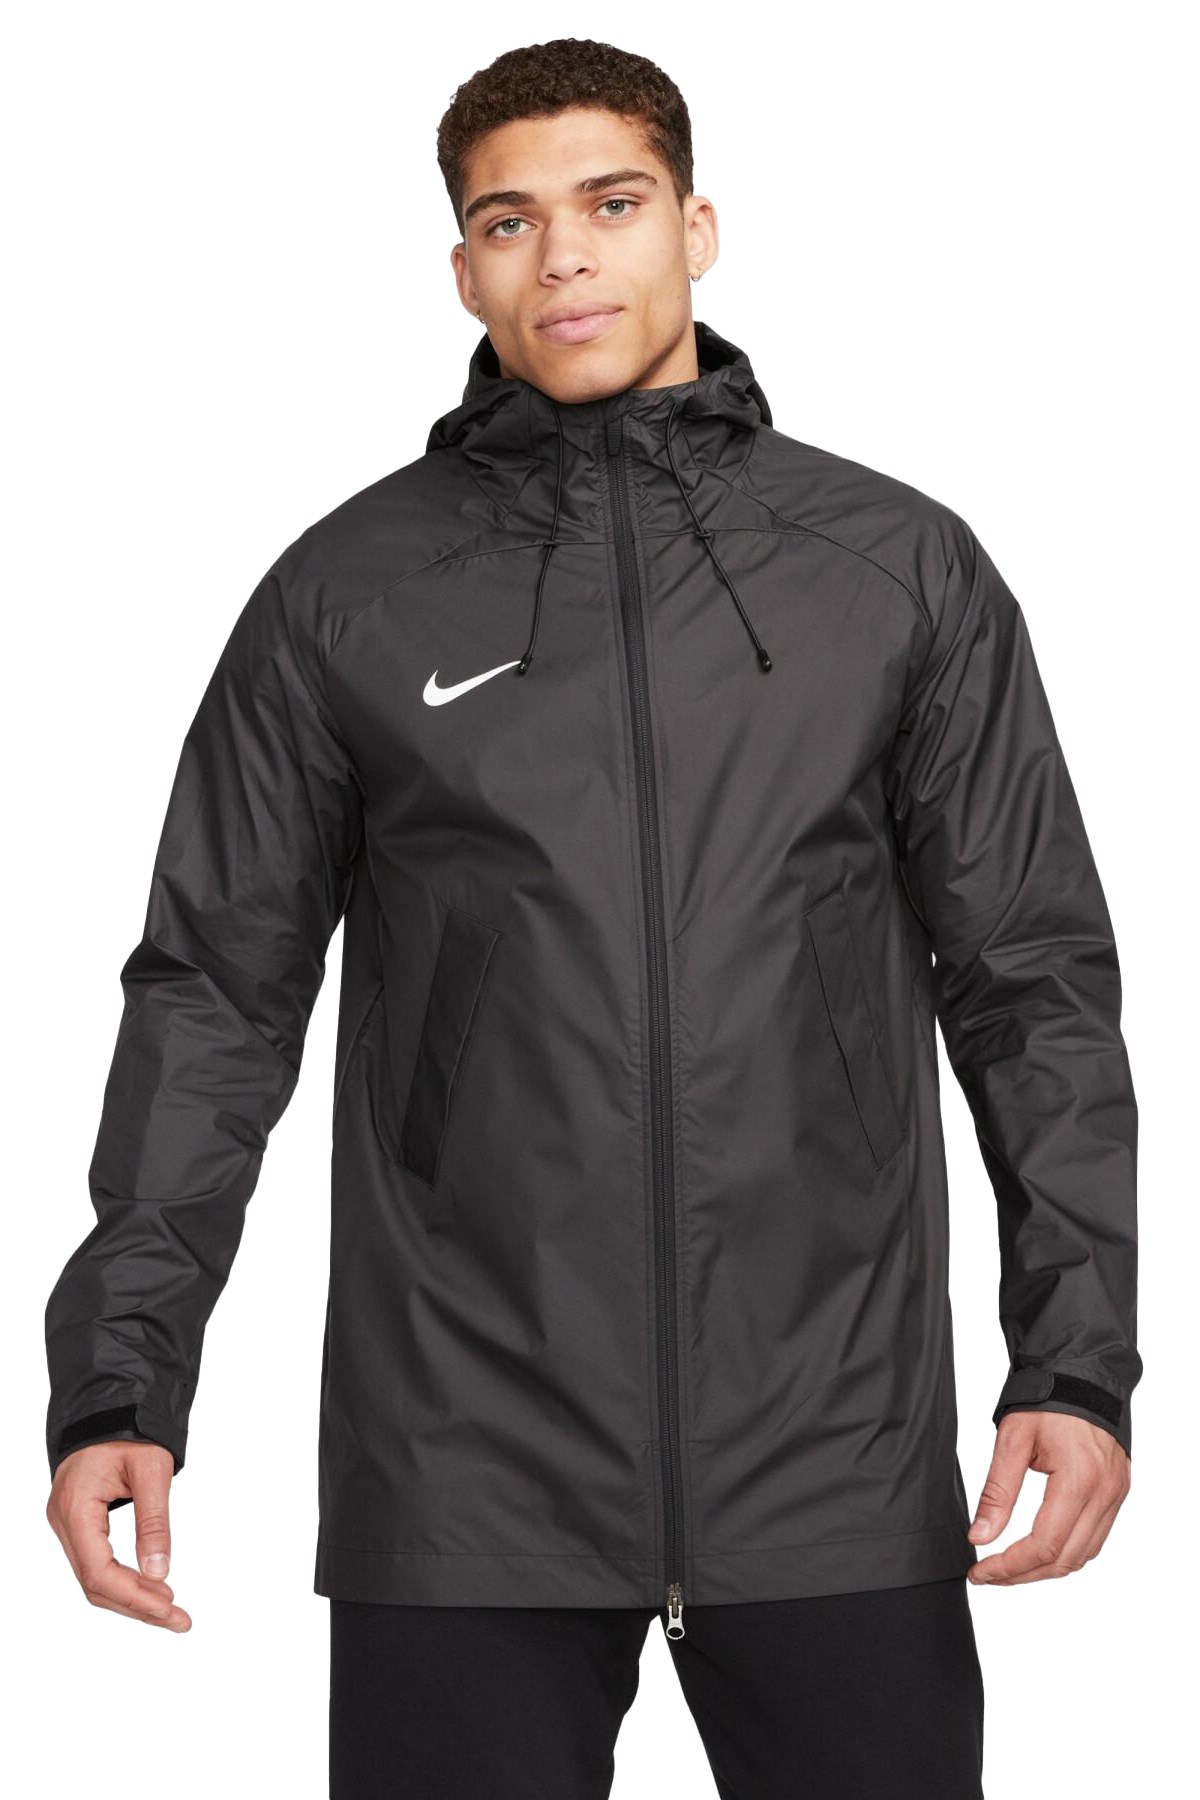 Куртка мужская Nike Nike Storm-FIT Academy Pro черная M